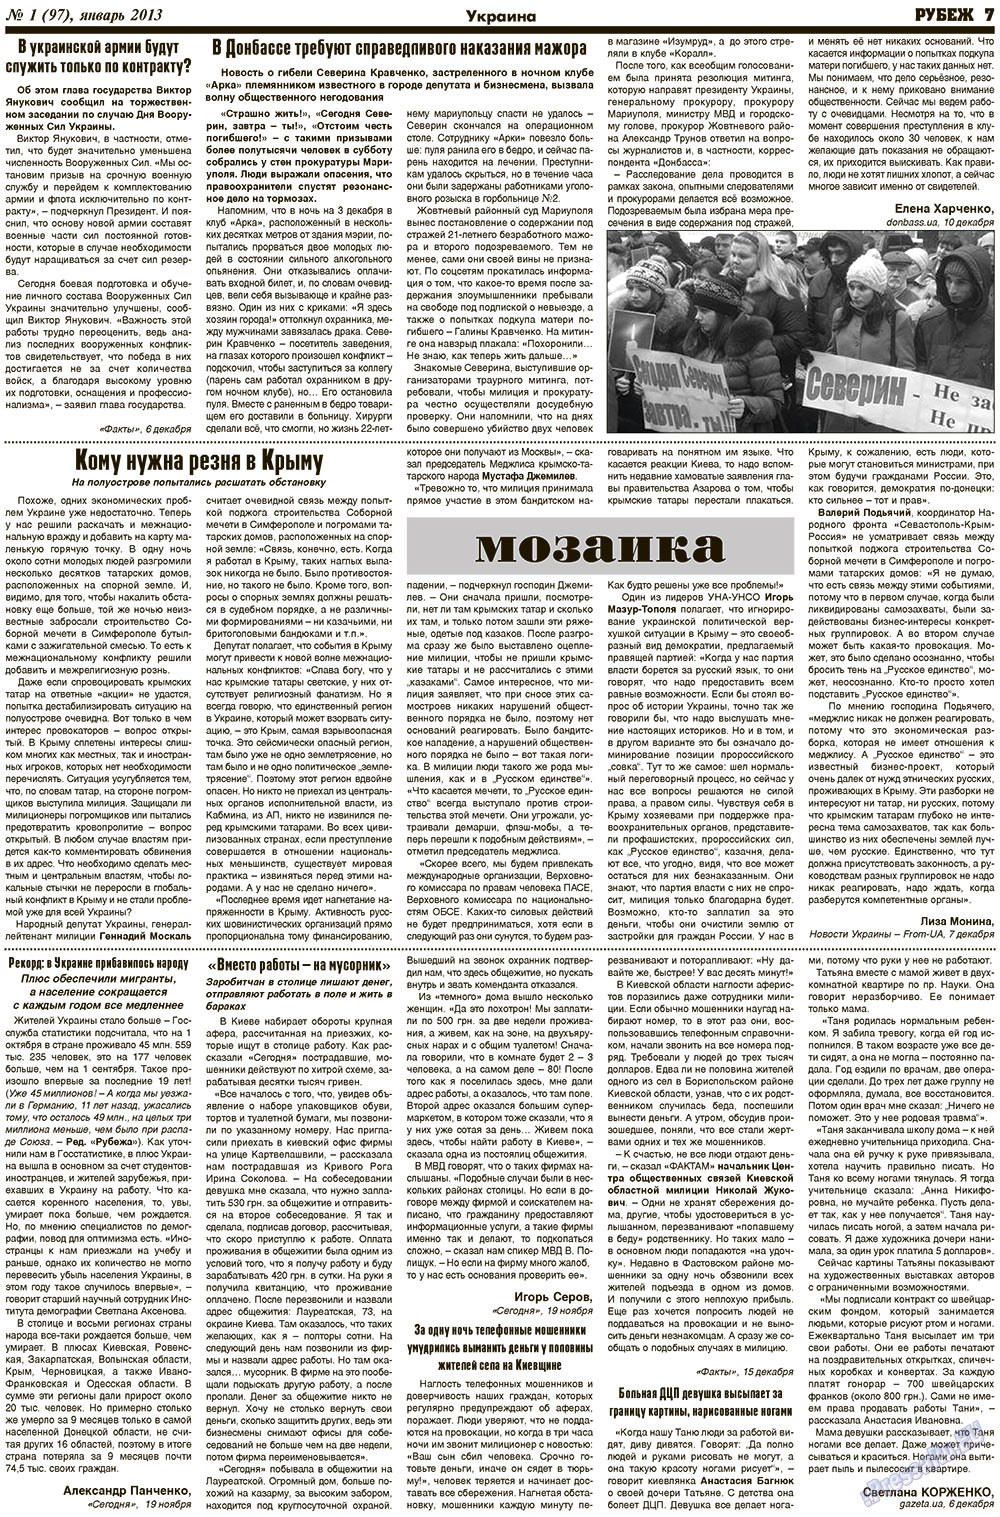 Рубеж, газета. 2013 №1 стр.7